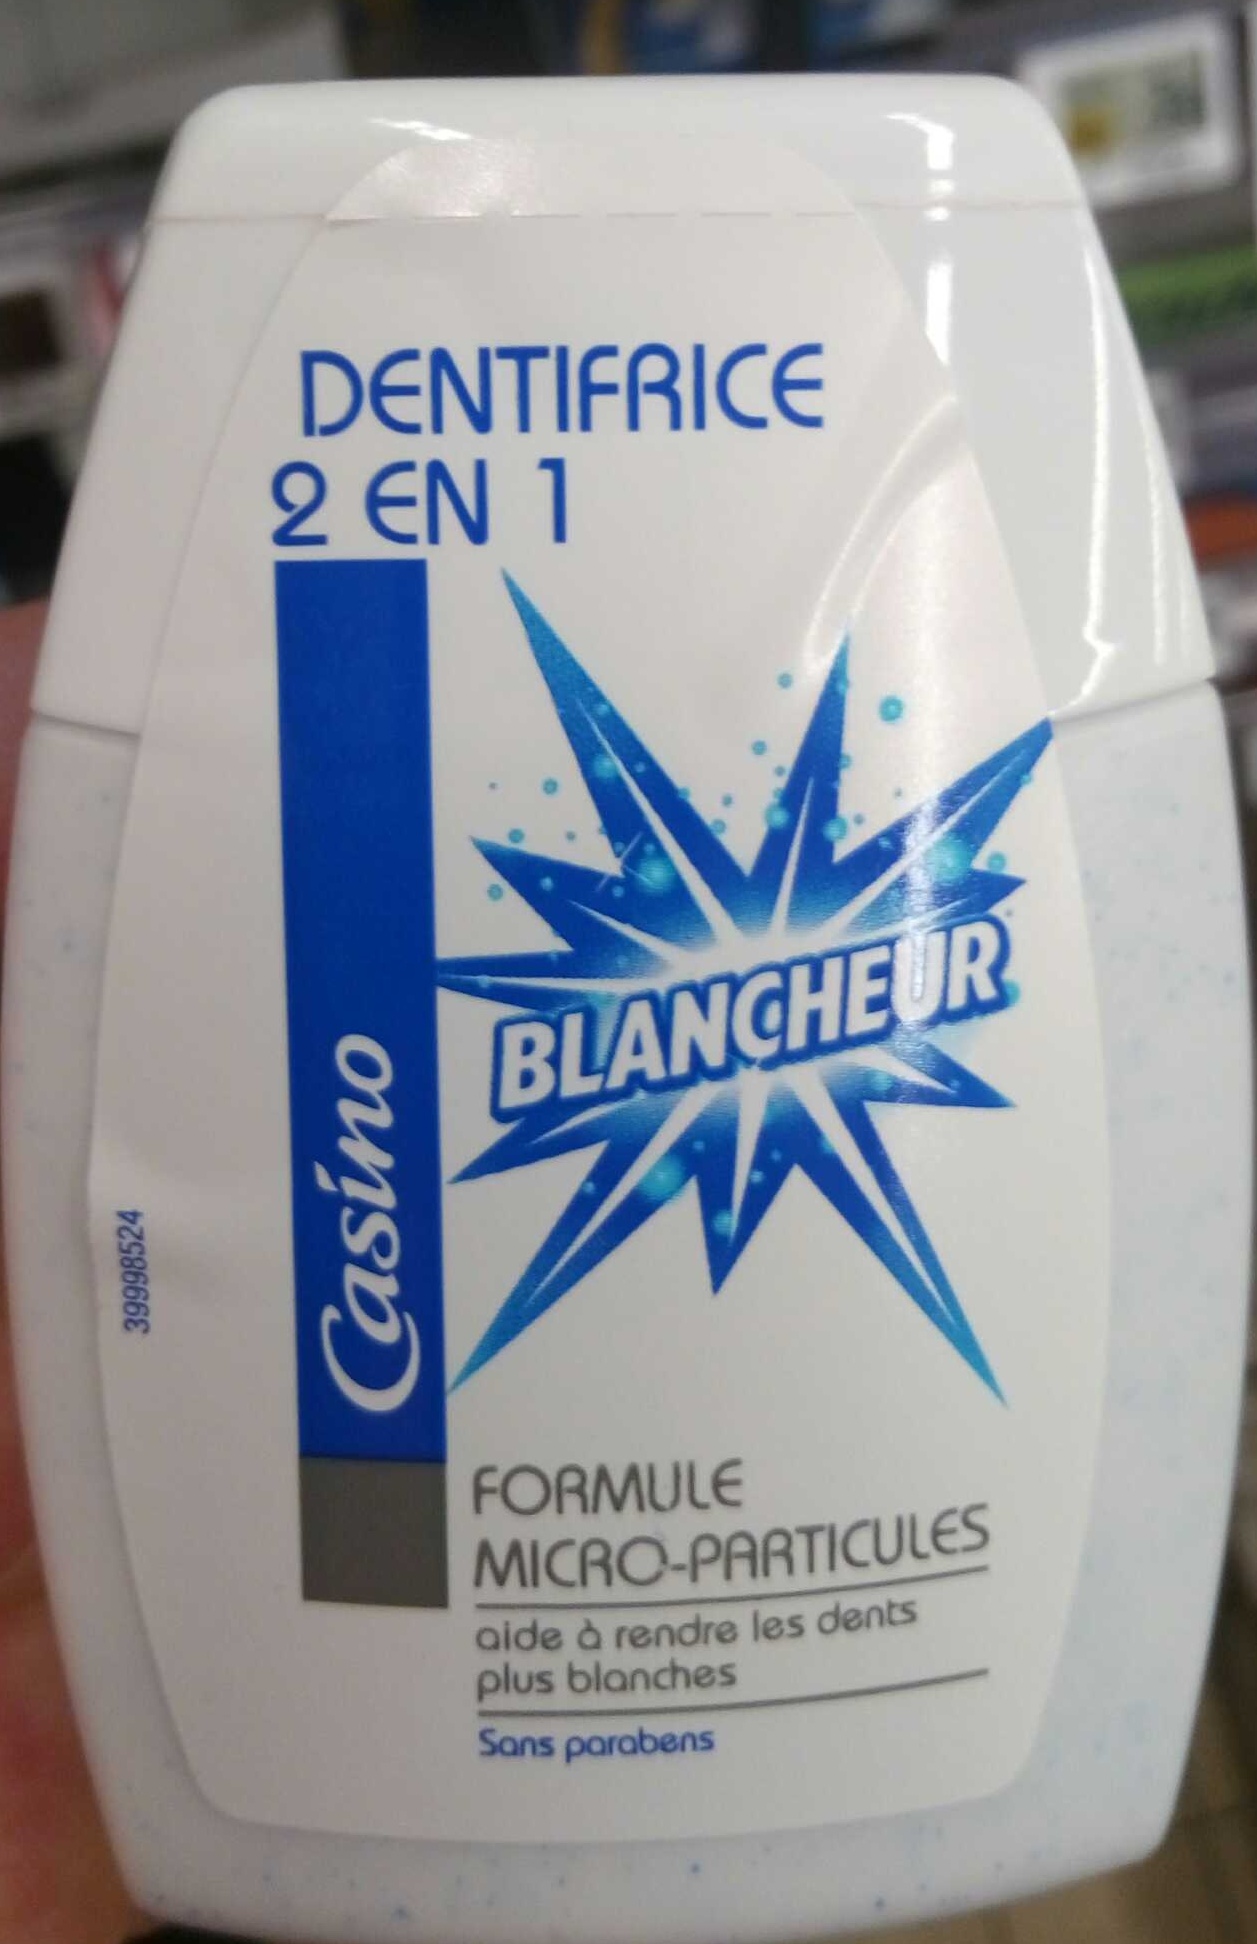 Dentifrice 2 en 1 Blancheur formule micro-particules - Product - fr